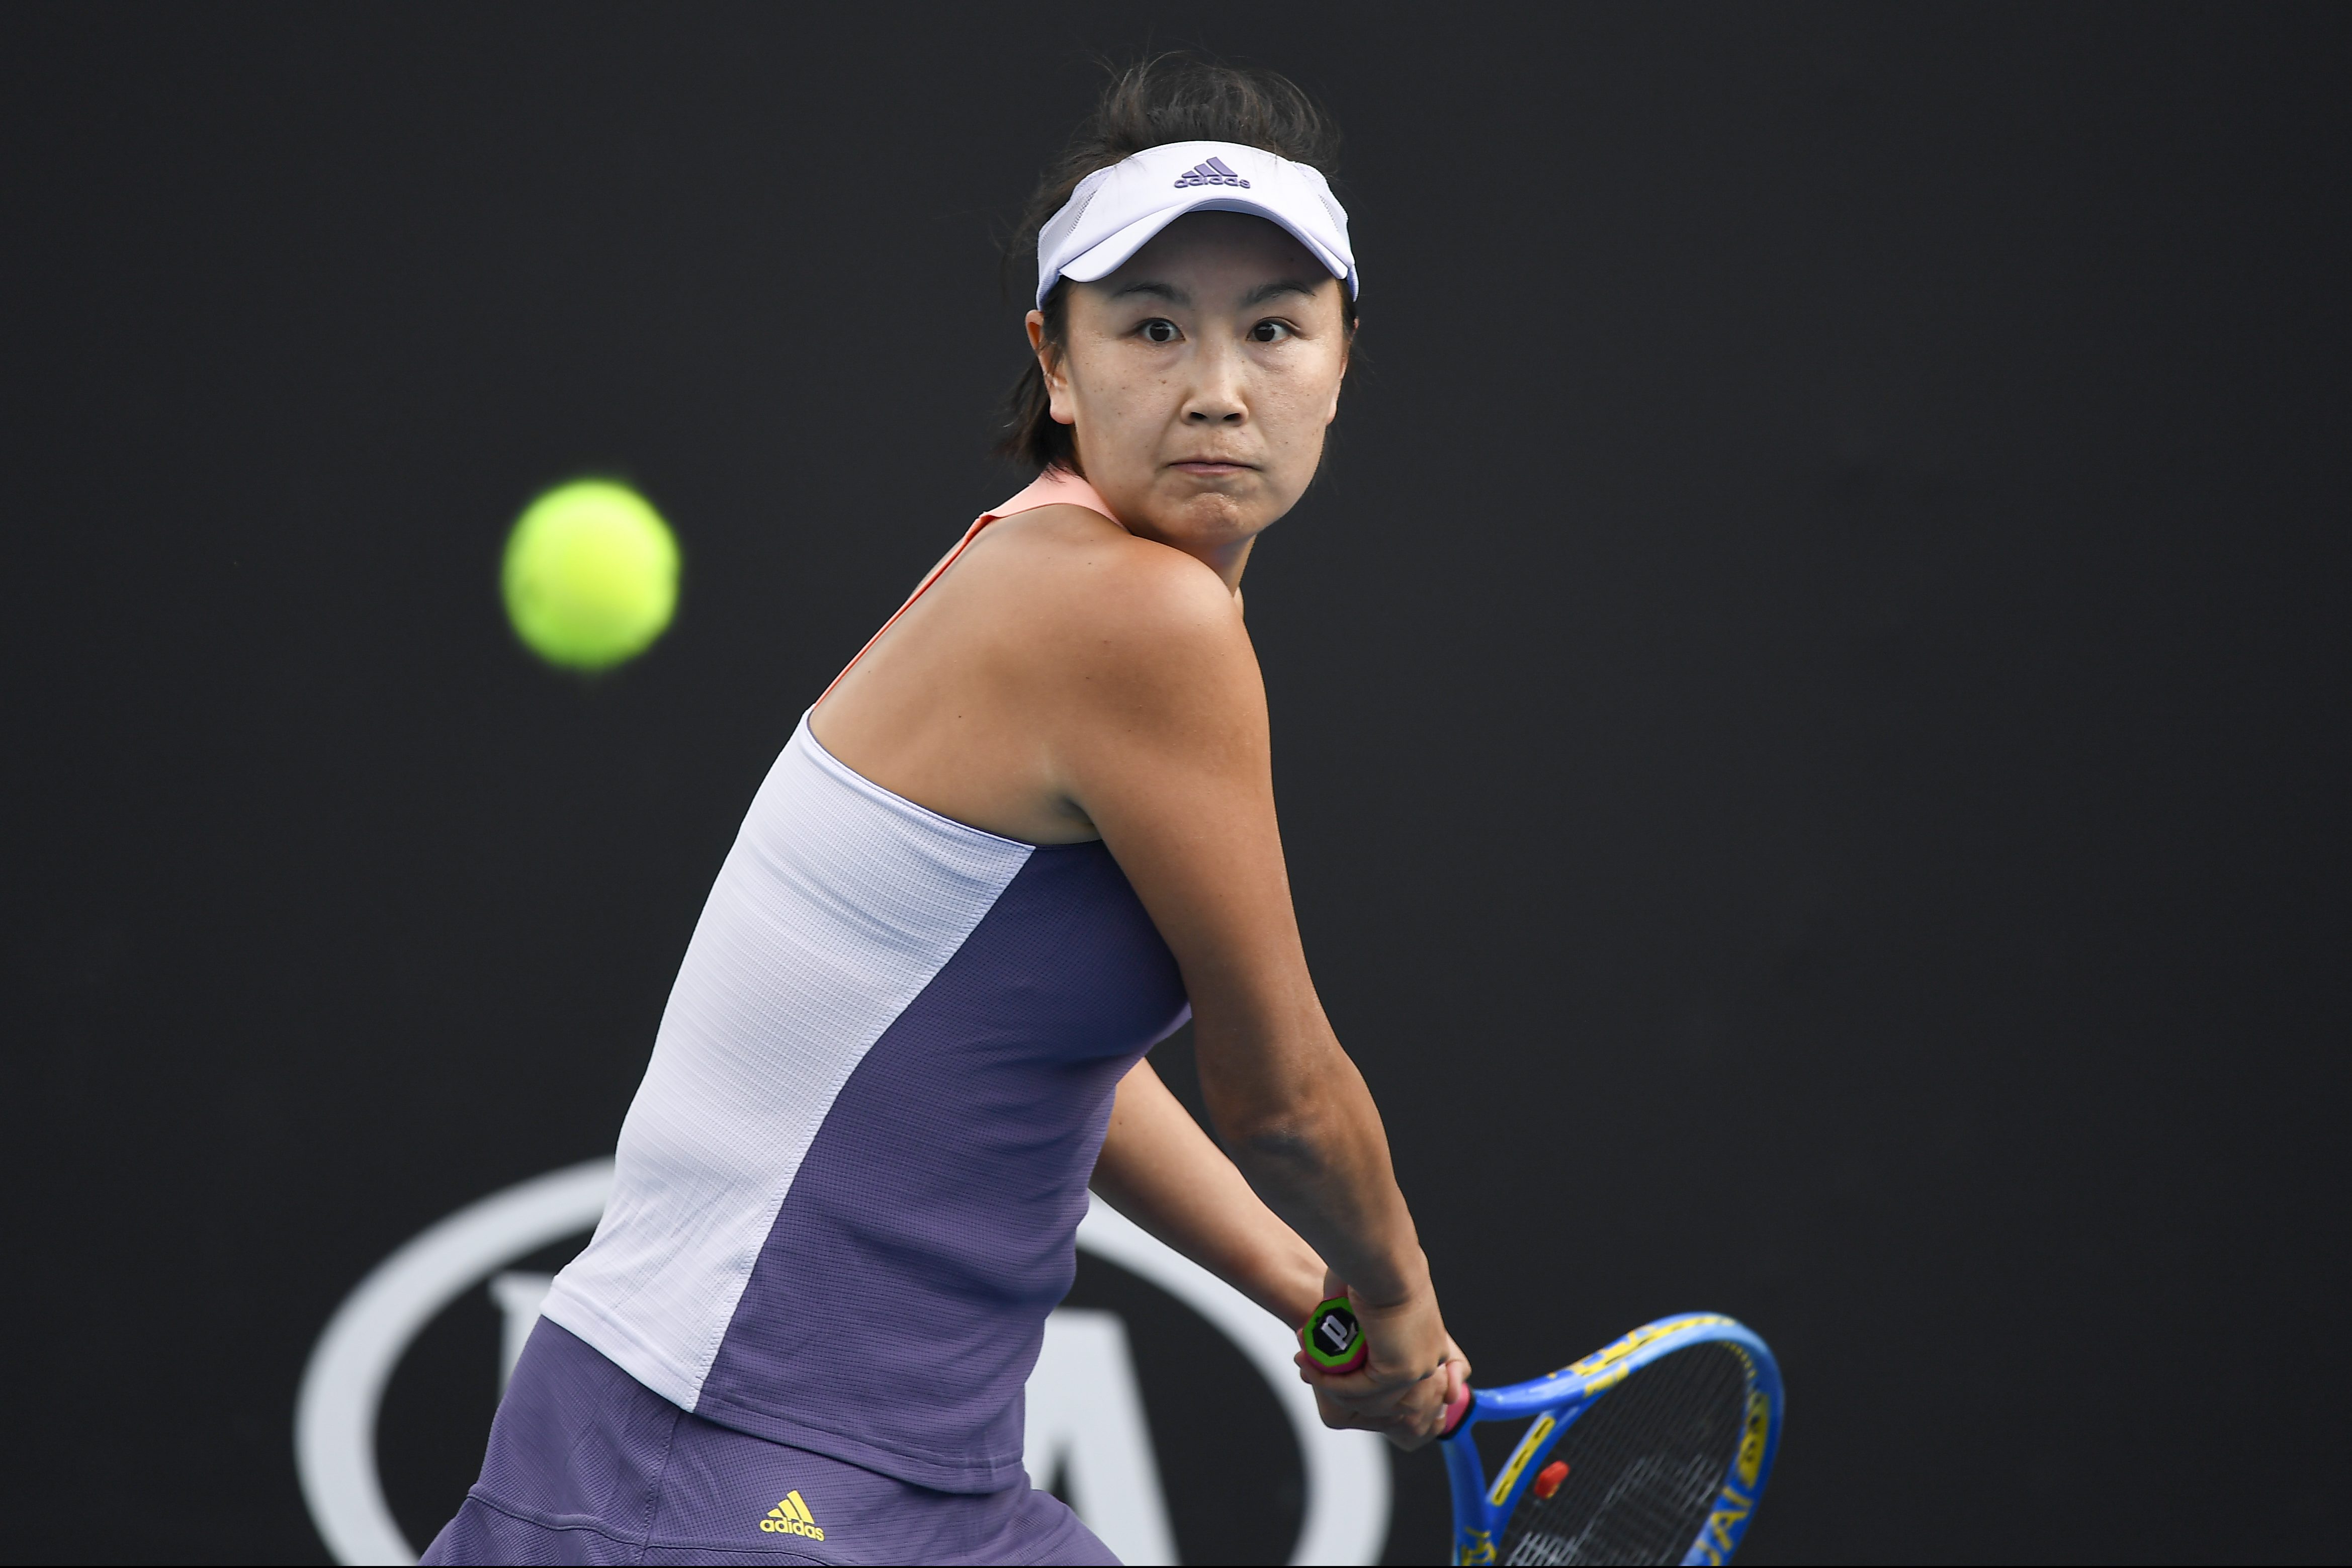 Peng Shuai of China at the 2020 Australian Open at Melbourne Park.